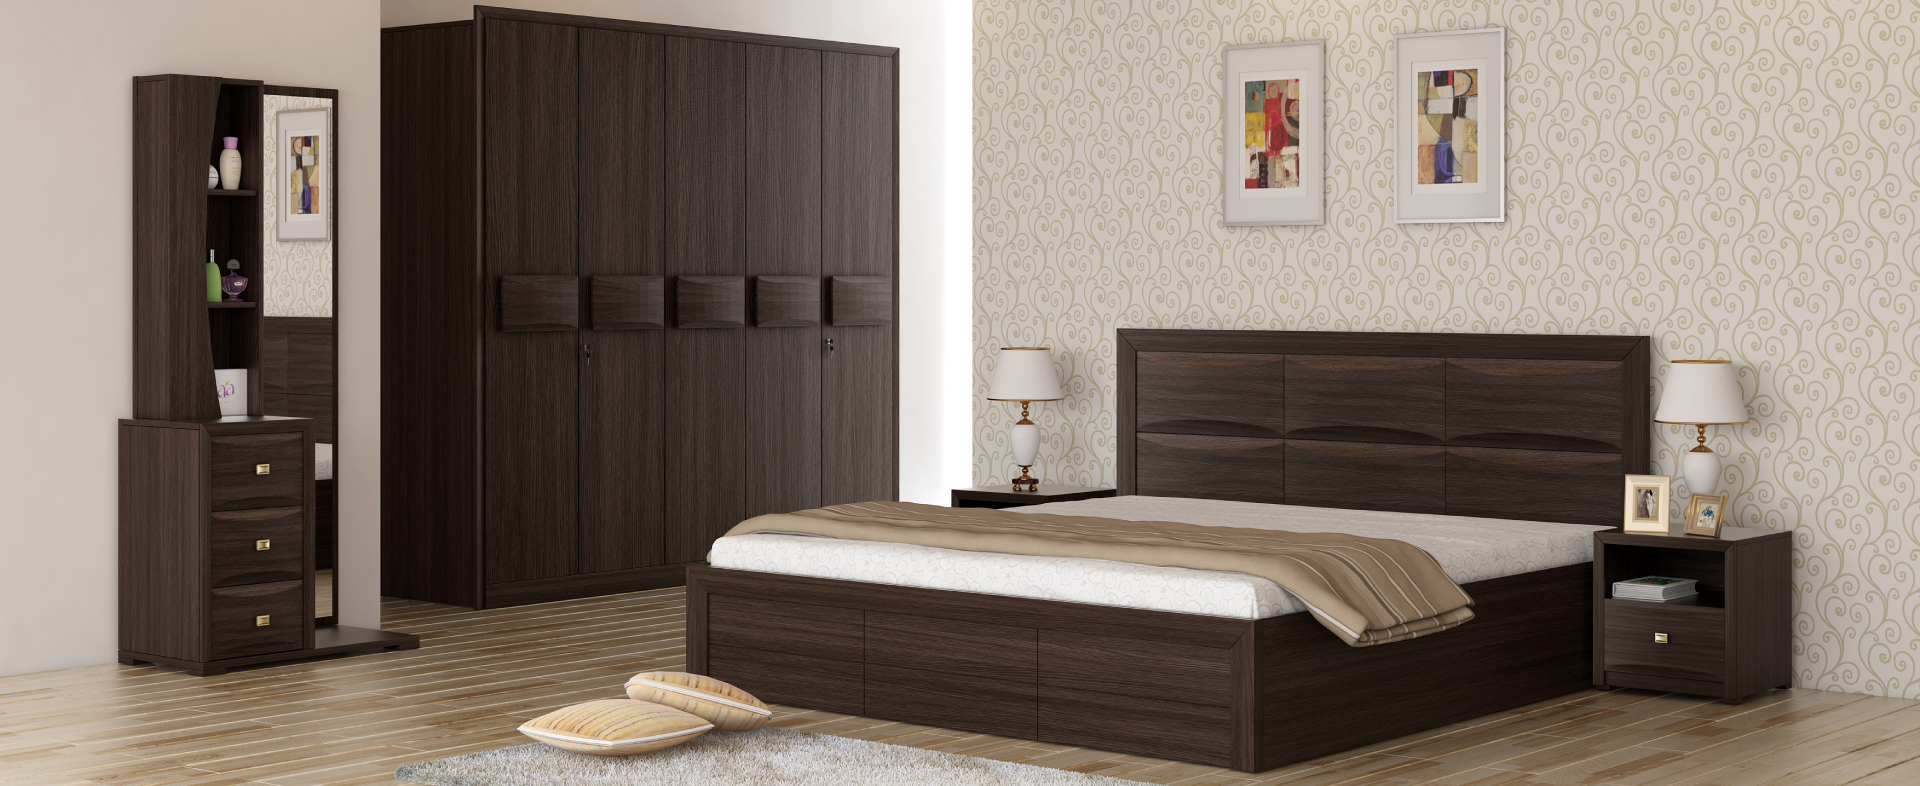 Bezaubernd Bedroom Farnichar Design Furniture Dabal Interior Ideas regarding measurements 1920 X 786